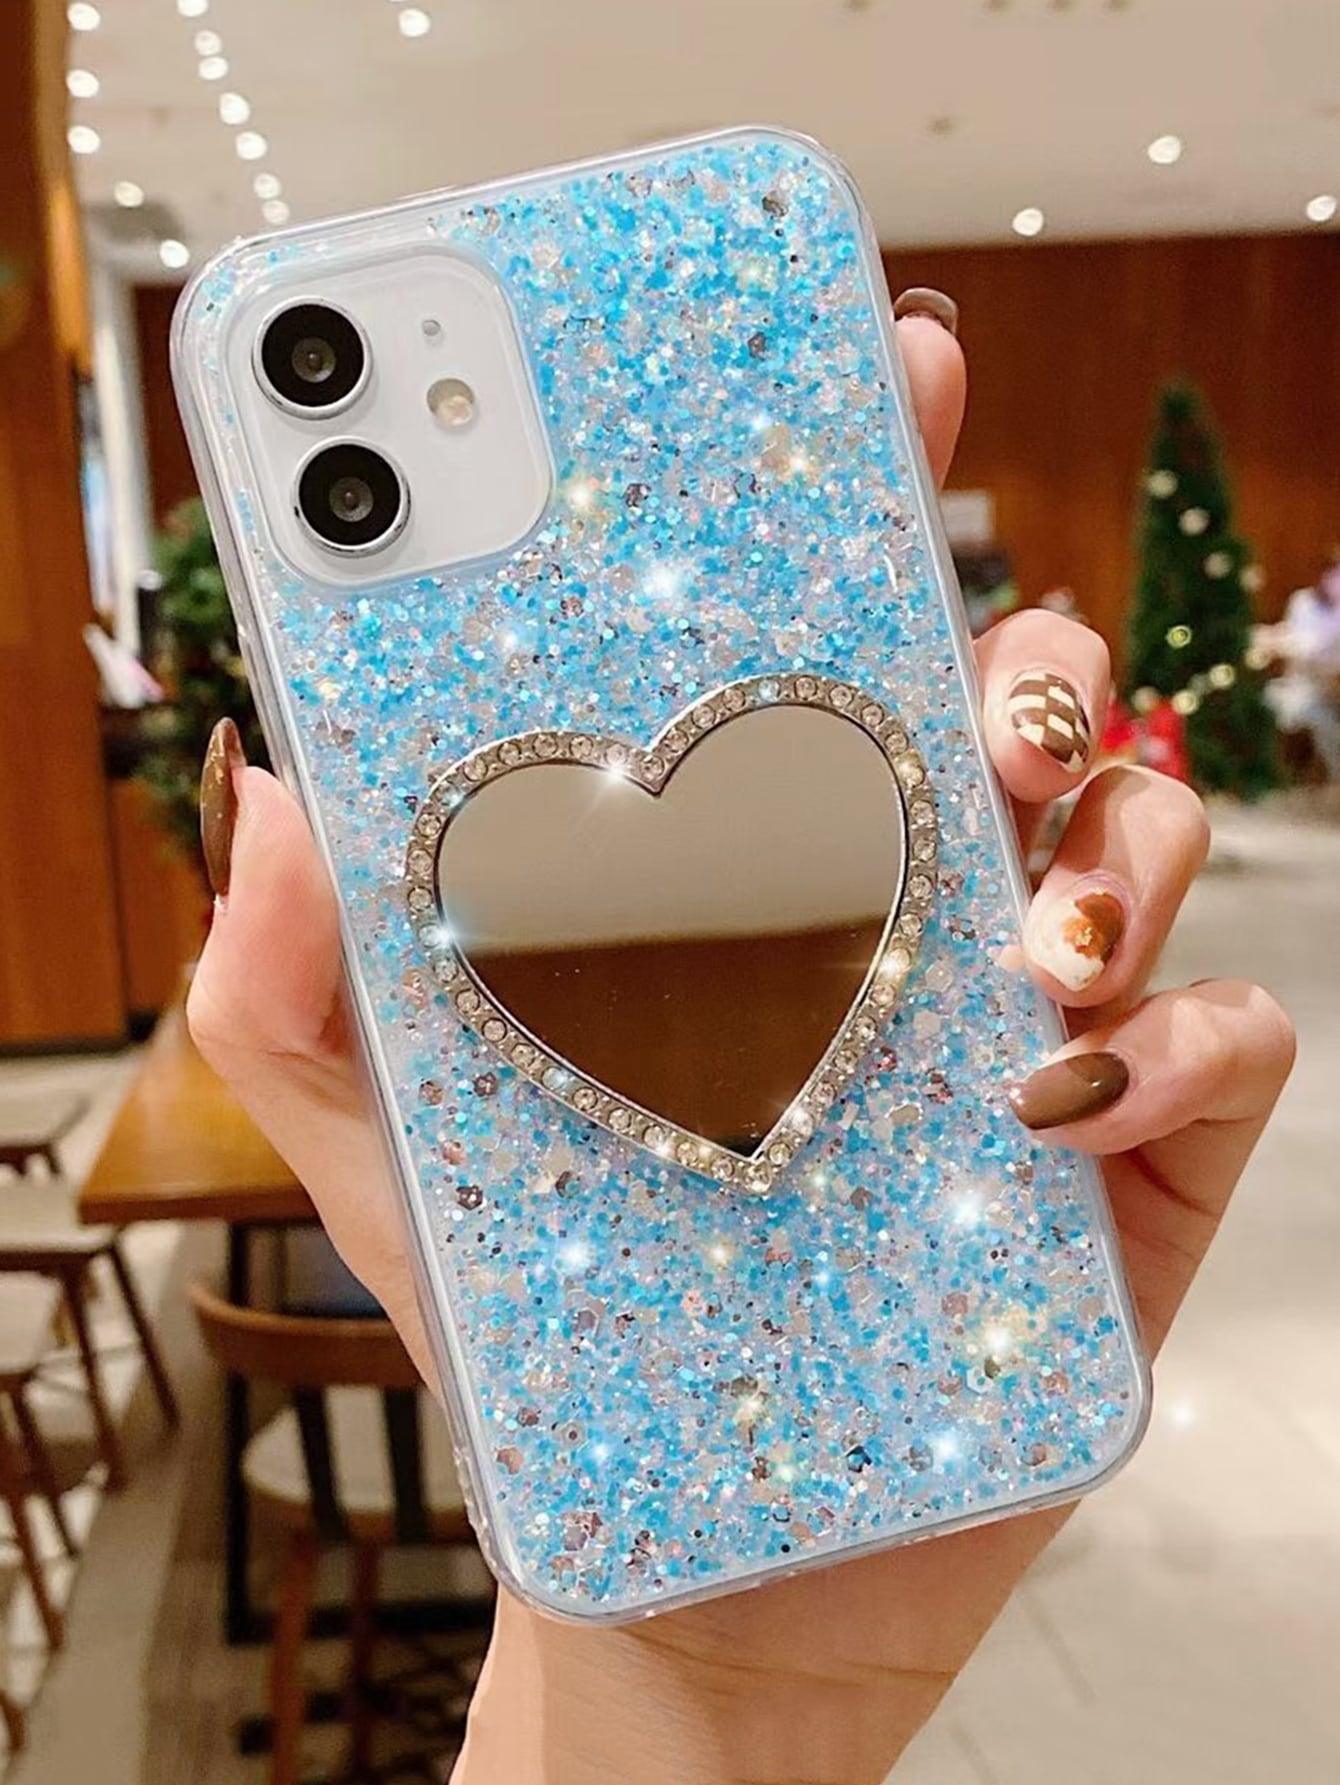 Rhinestone Decor Heart Shaped Mirror Glitter Phone Case - Decotree.co Online Shop